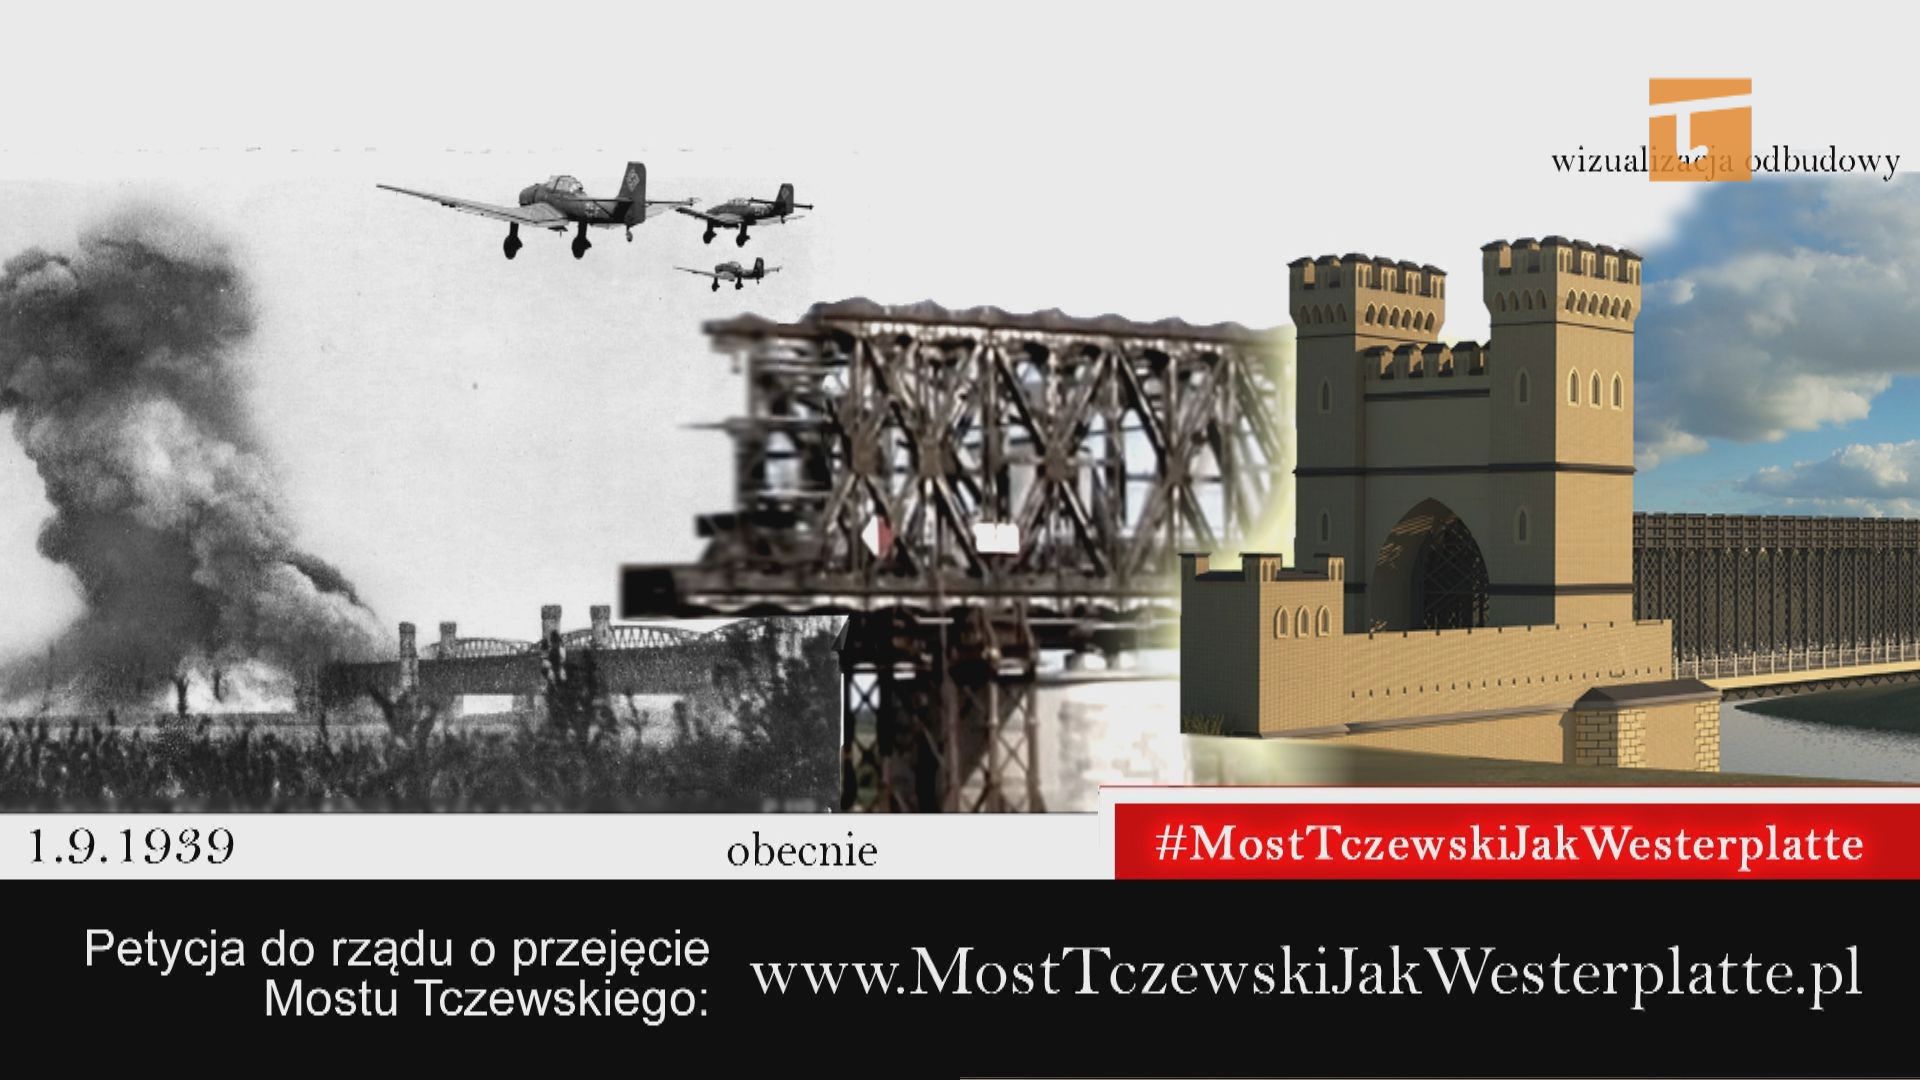 Most Tczewski jak Westerplatte